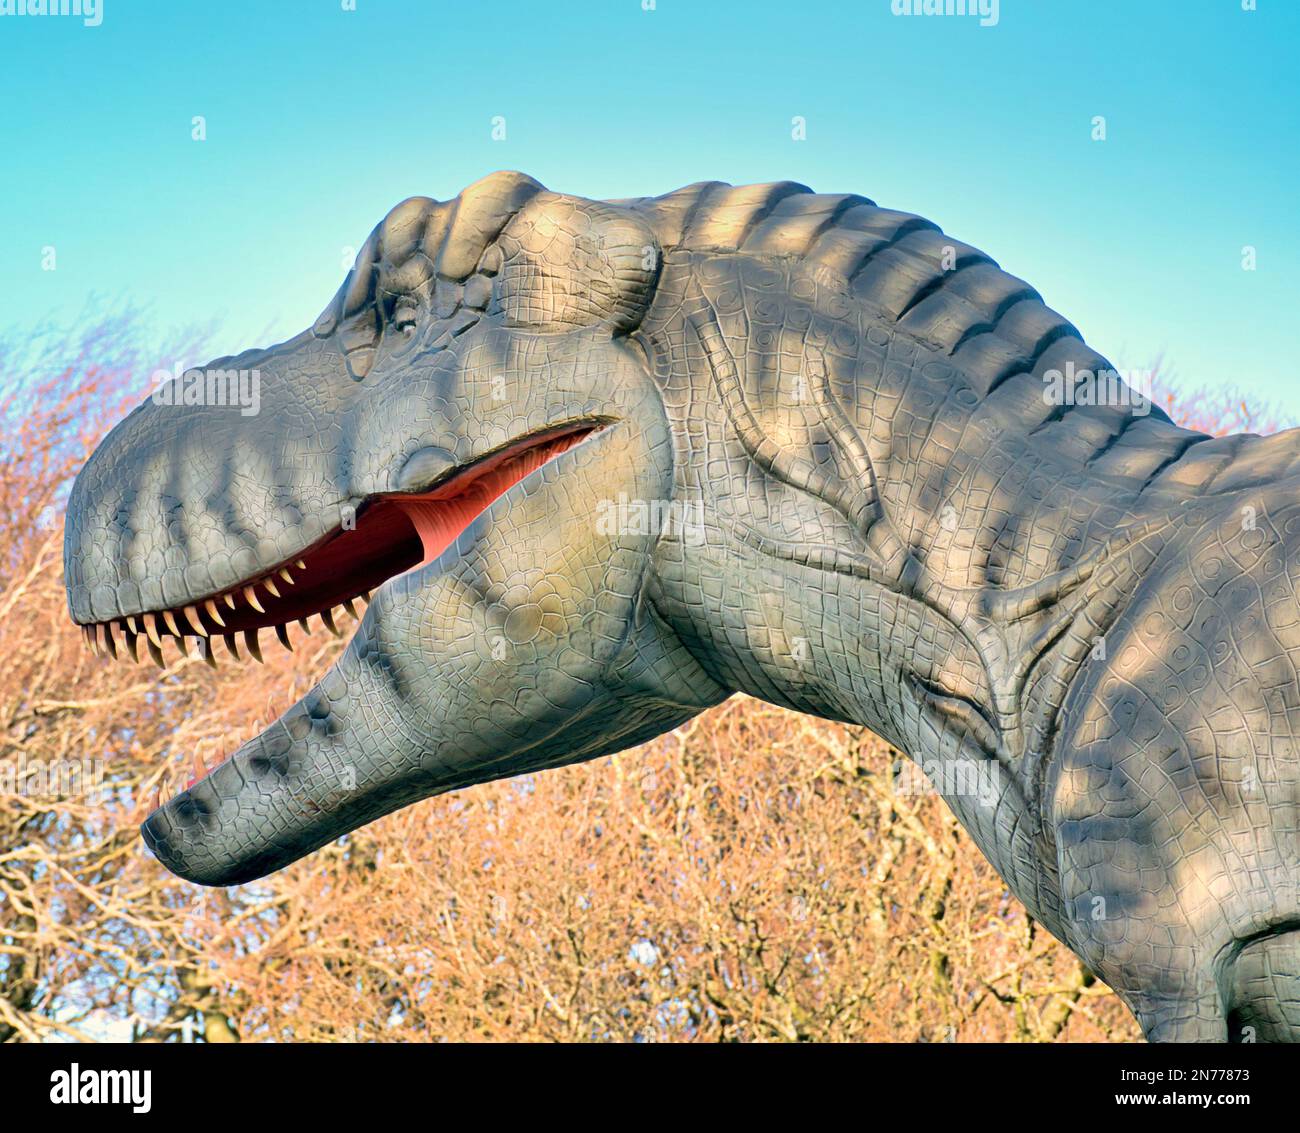 animatronic model  of Tyrannosaurus rex often called T. rex or colloquially T-Rex at Edinburgh Zoo Hilltop dinosaur display Stock Photo